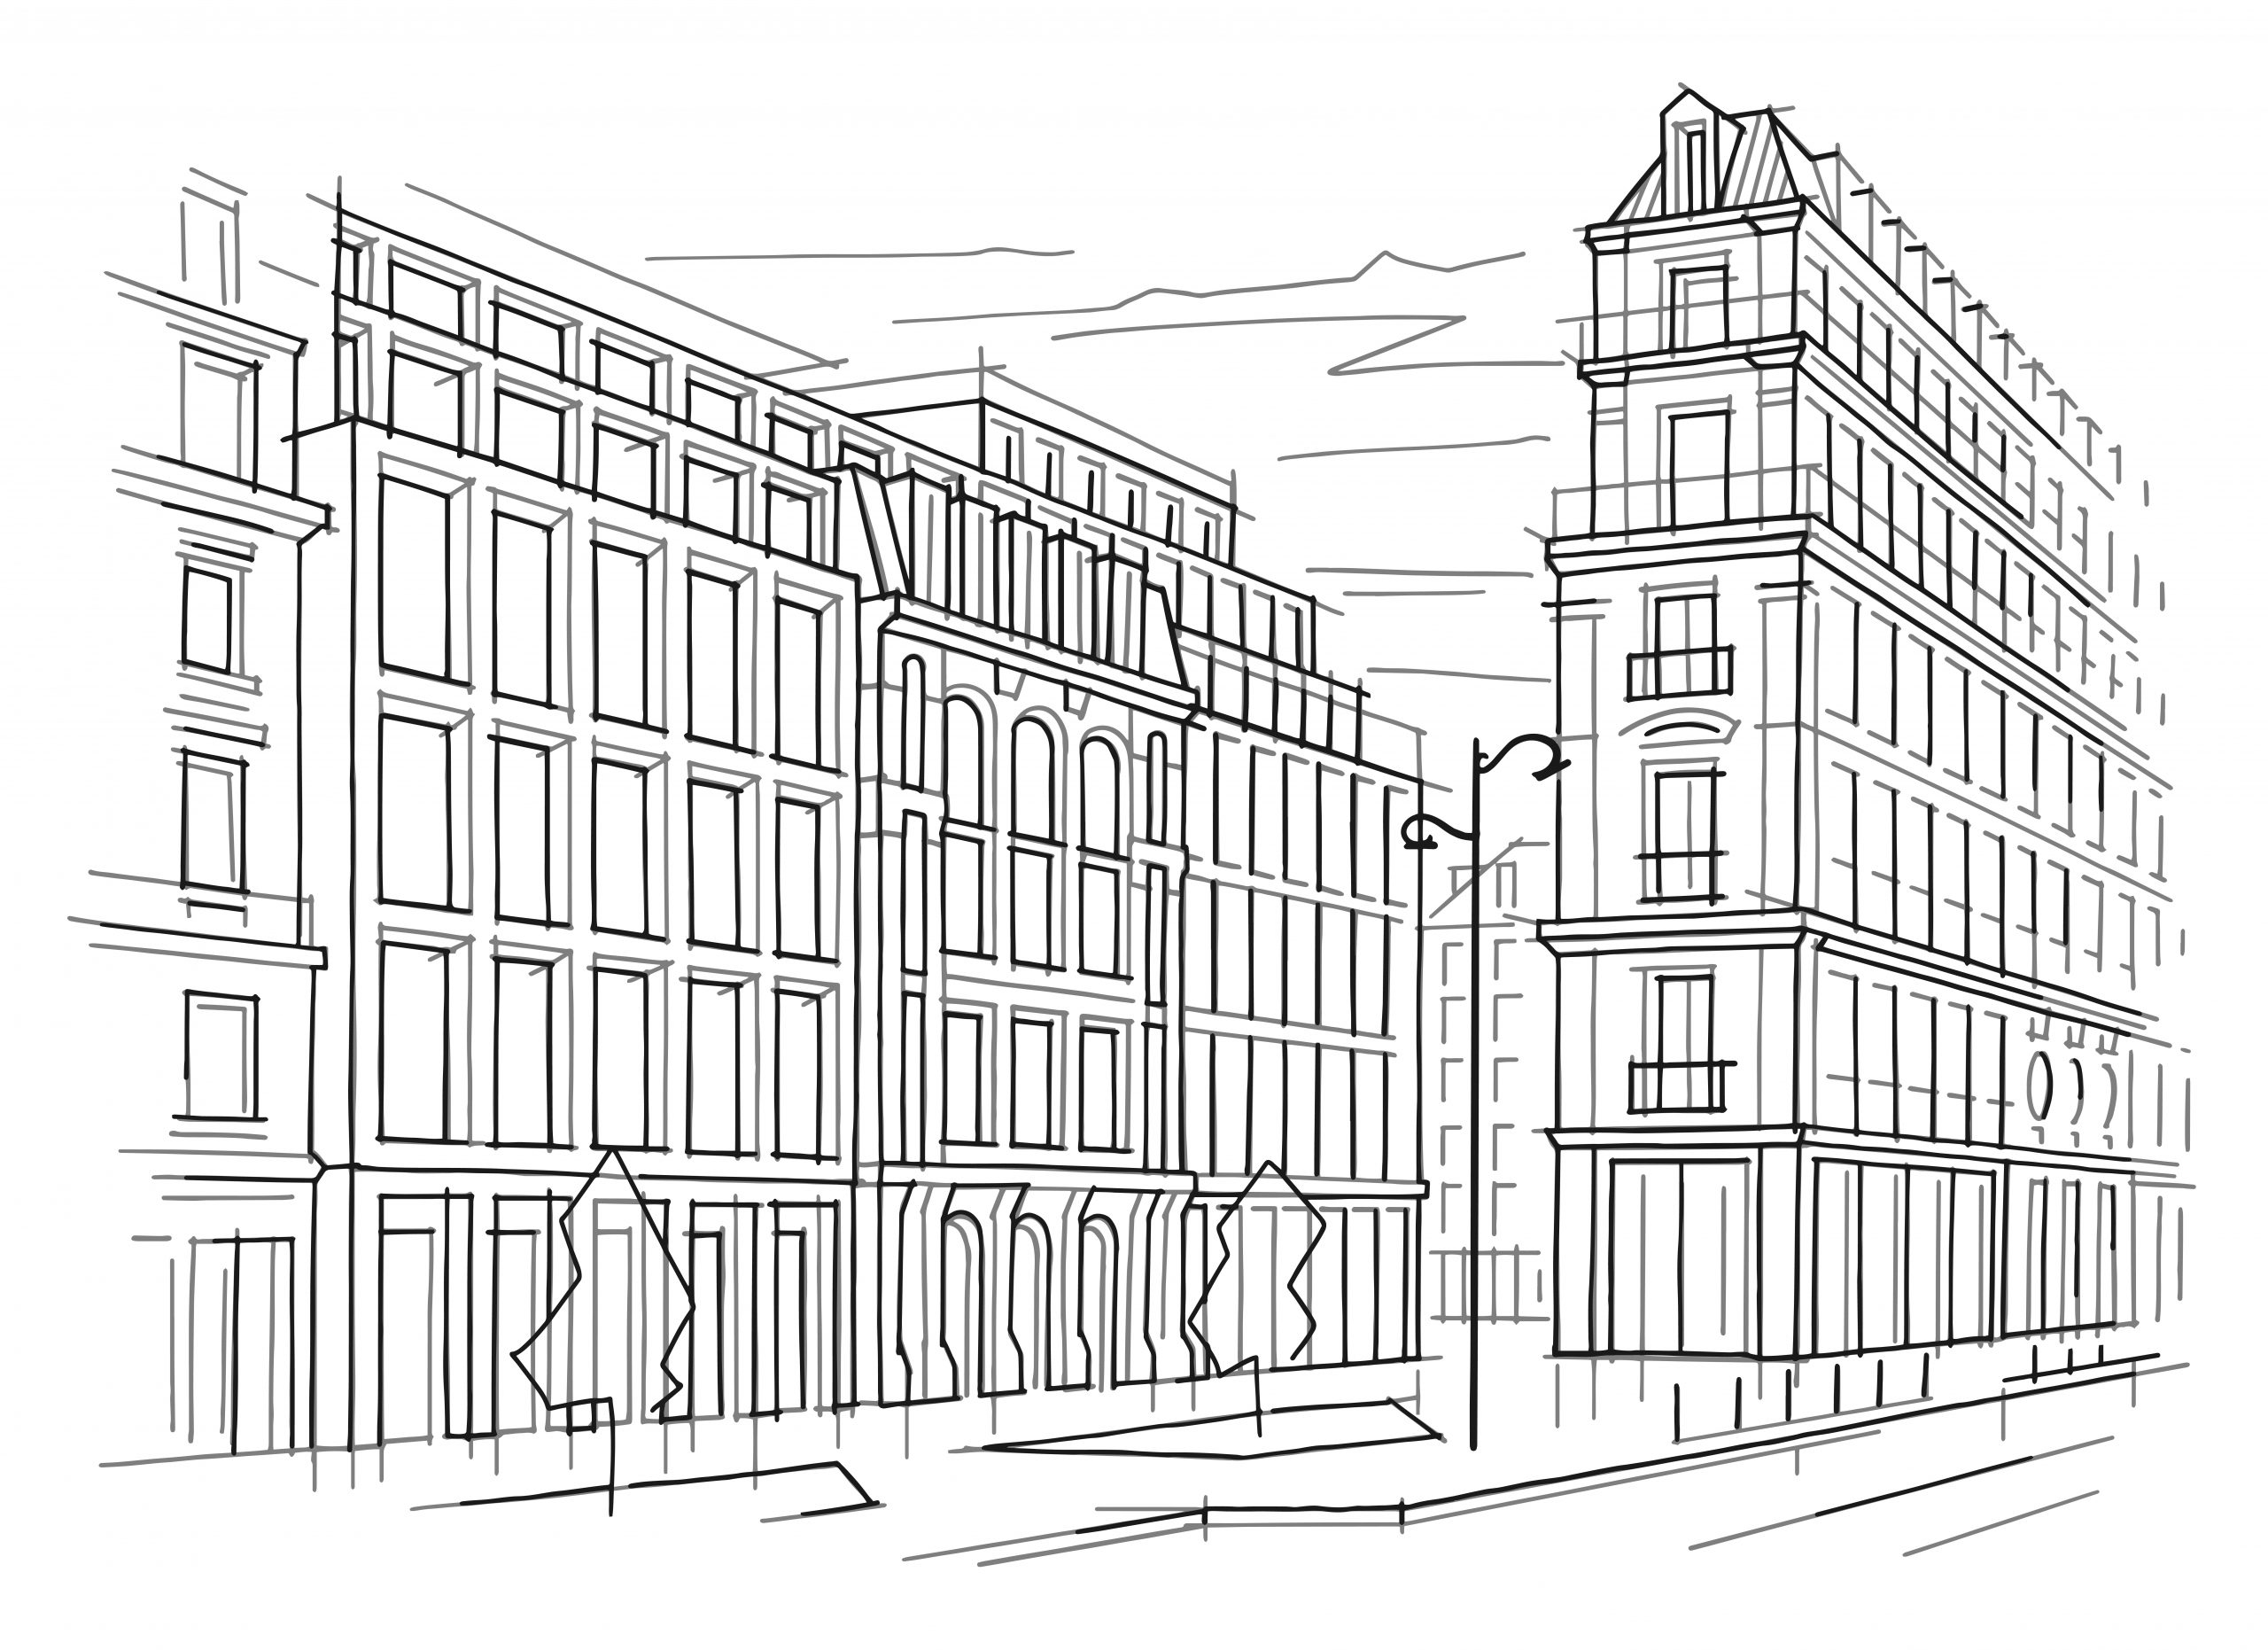 3c rendering of apartments